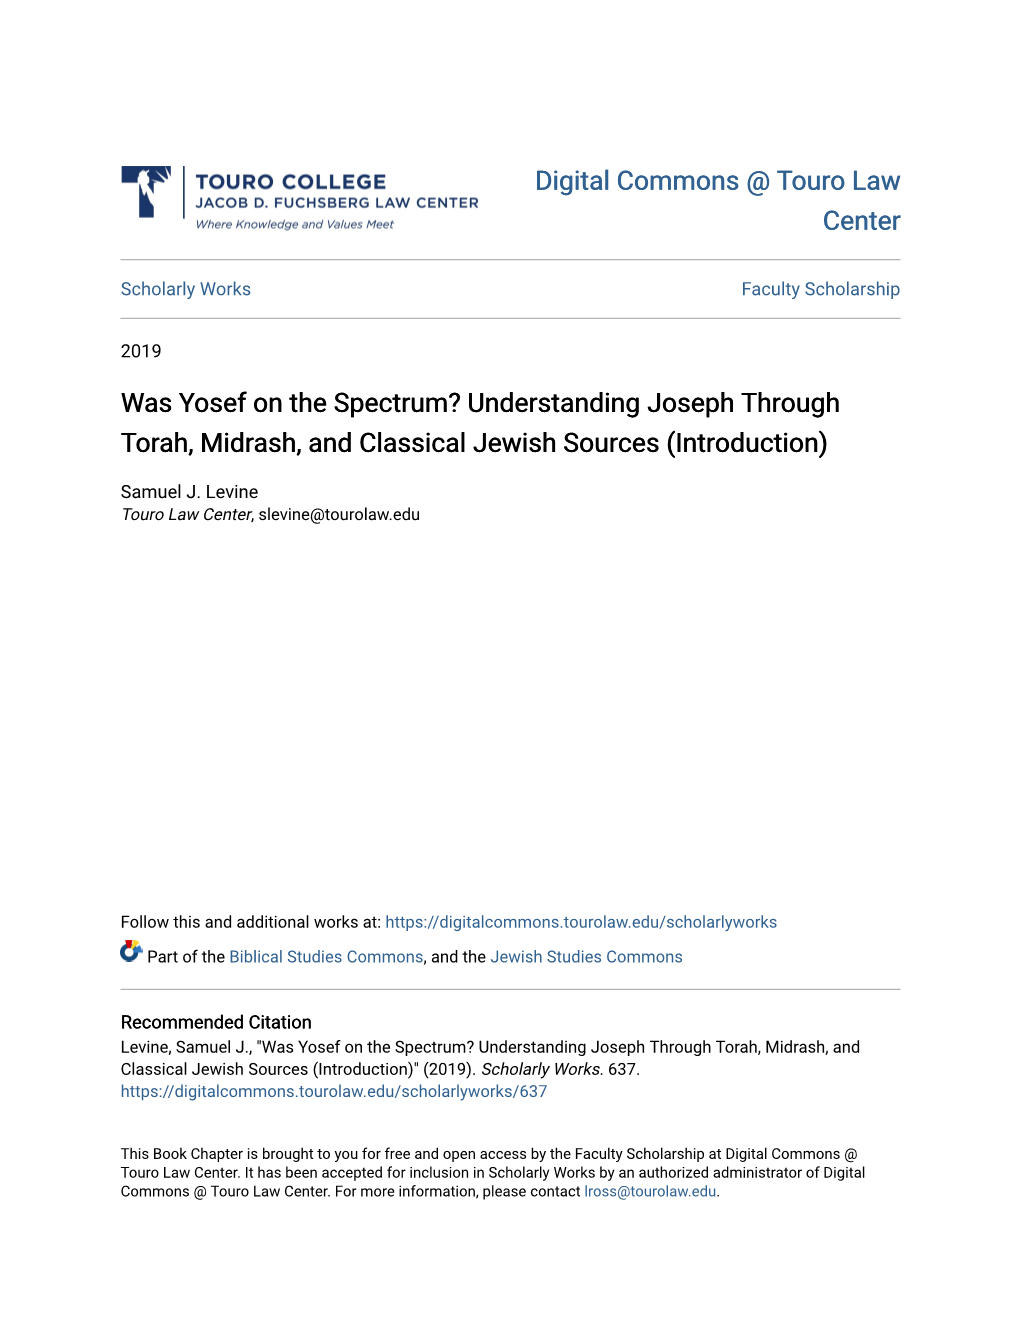 Was Yosef on the Spectrum? Understanding Joseph Through Torah, Midrash, and Classical Jewish Sources (Introduction)